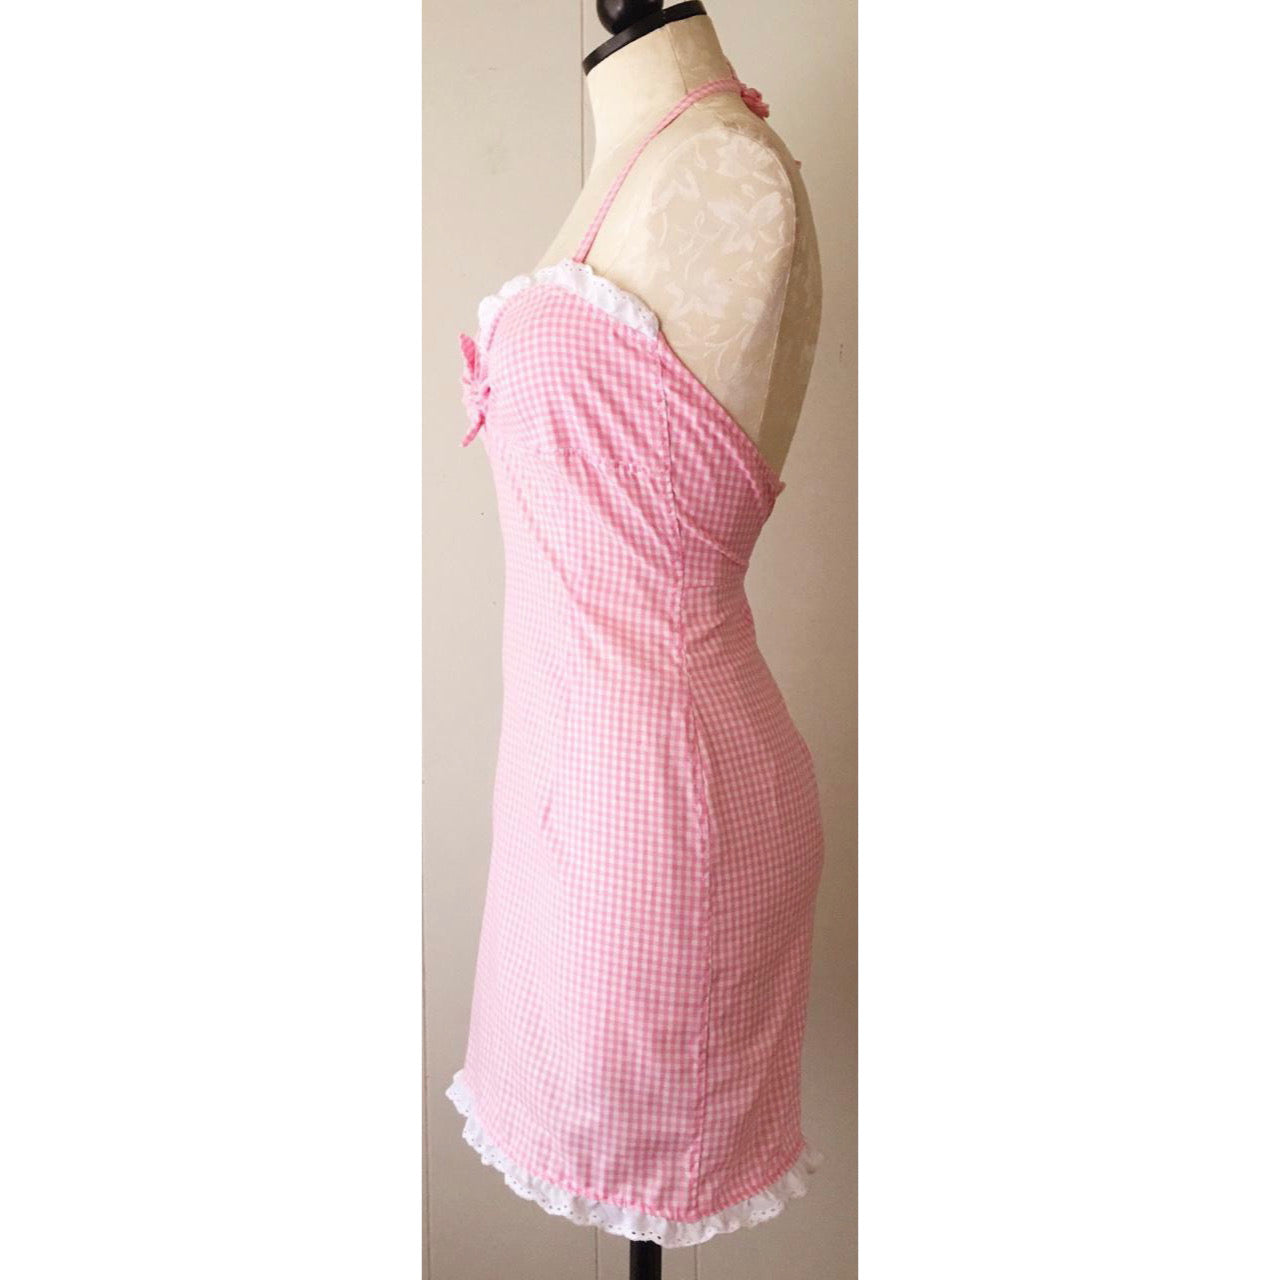 The Debra Dress in Pink Gingham